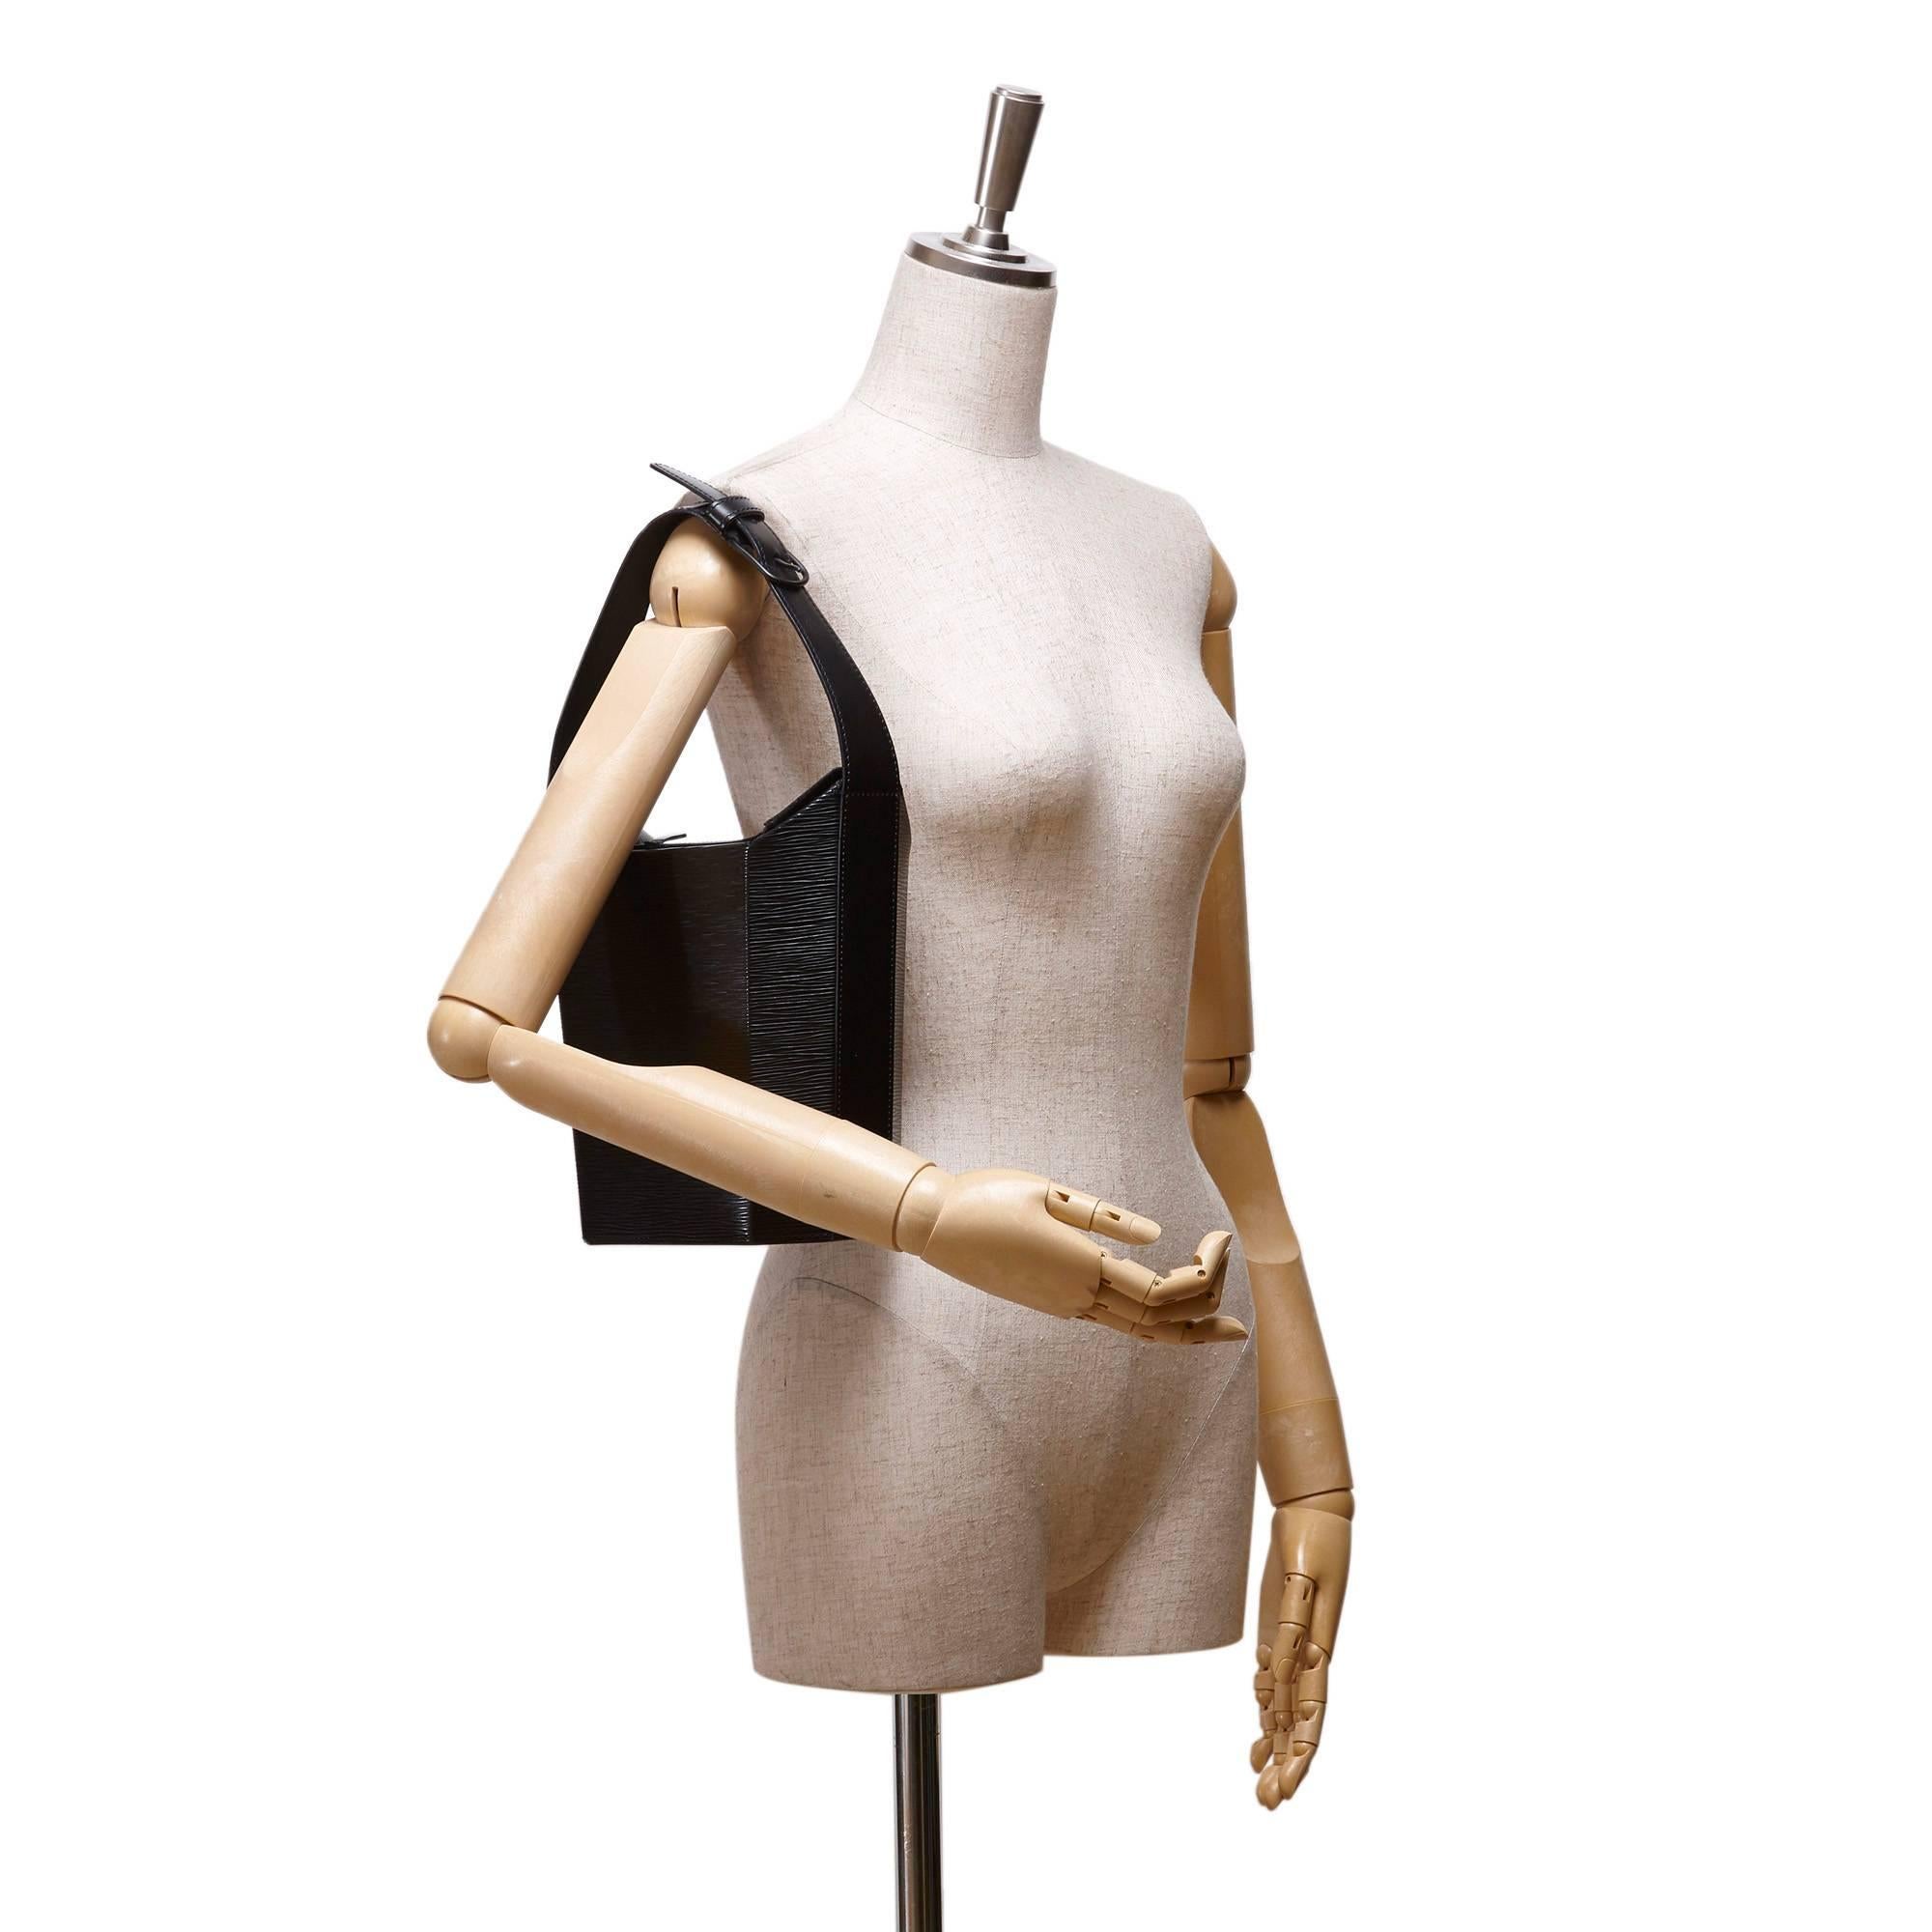 - This Louis Vuitton black Sac Seau bag features an epi leather body, a flat shoulder strap, an open top, and an interior zip pocket.

- Size: 19cm x 20cm x 10cm. Shoulder Drop: 16cm. 

- Serial no: VI0987. 

- Include: Dust bag. 

